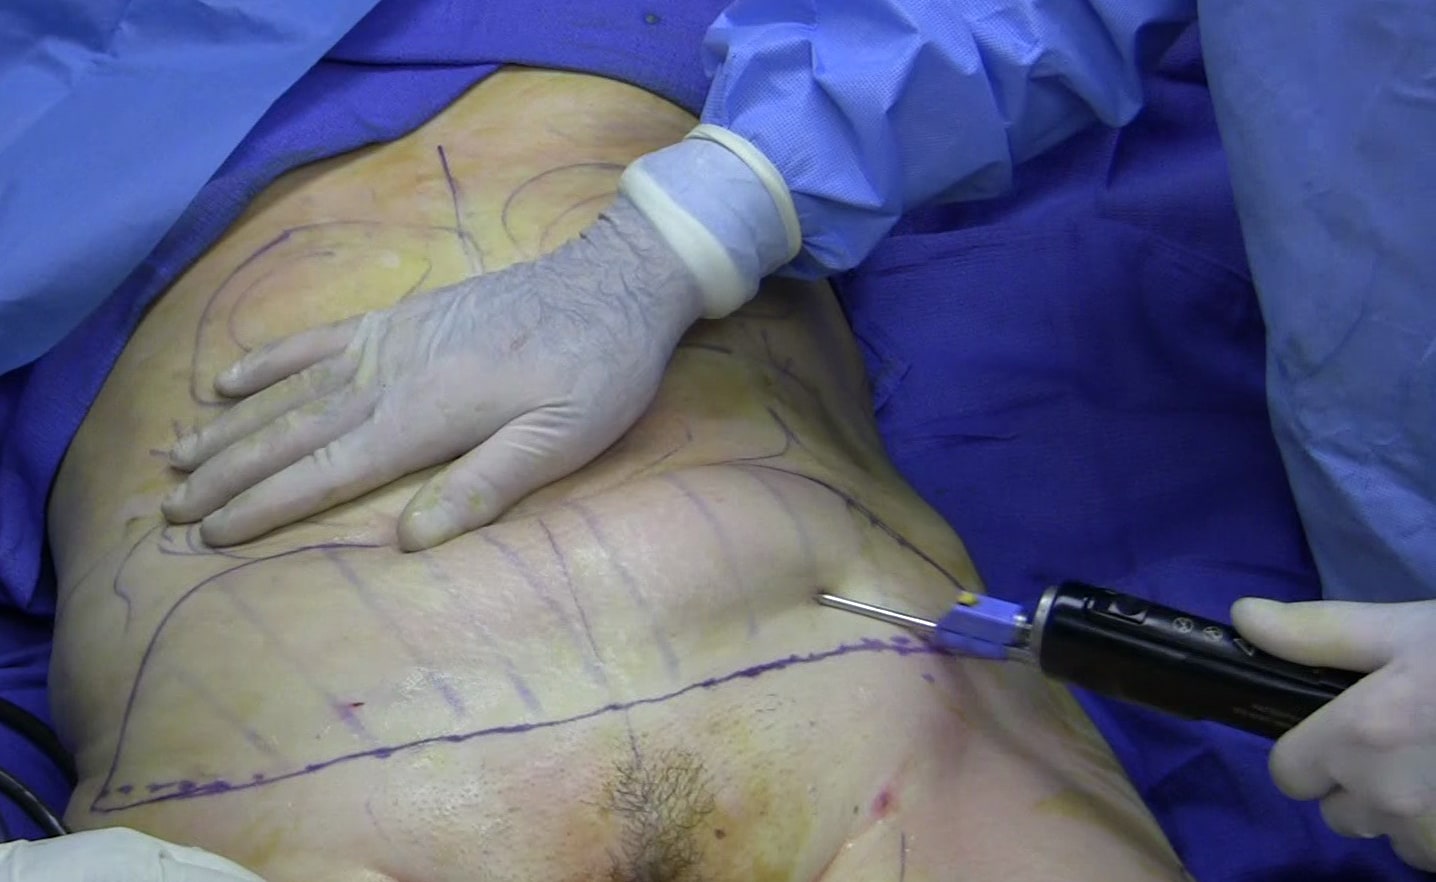 back-bra-fat-liposuction-karachi-pakistan - Cosmetic Surgeon